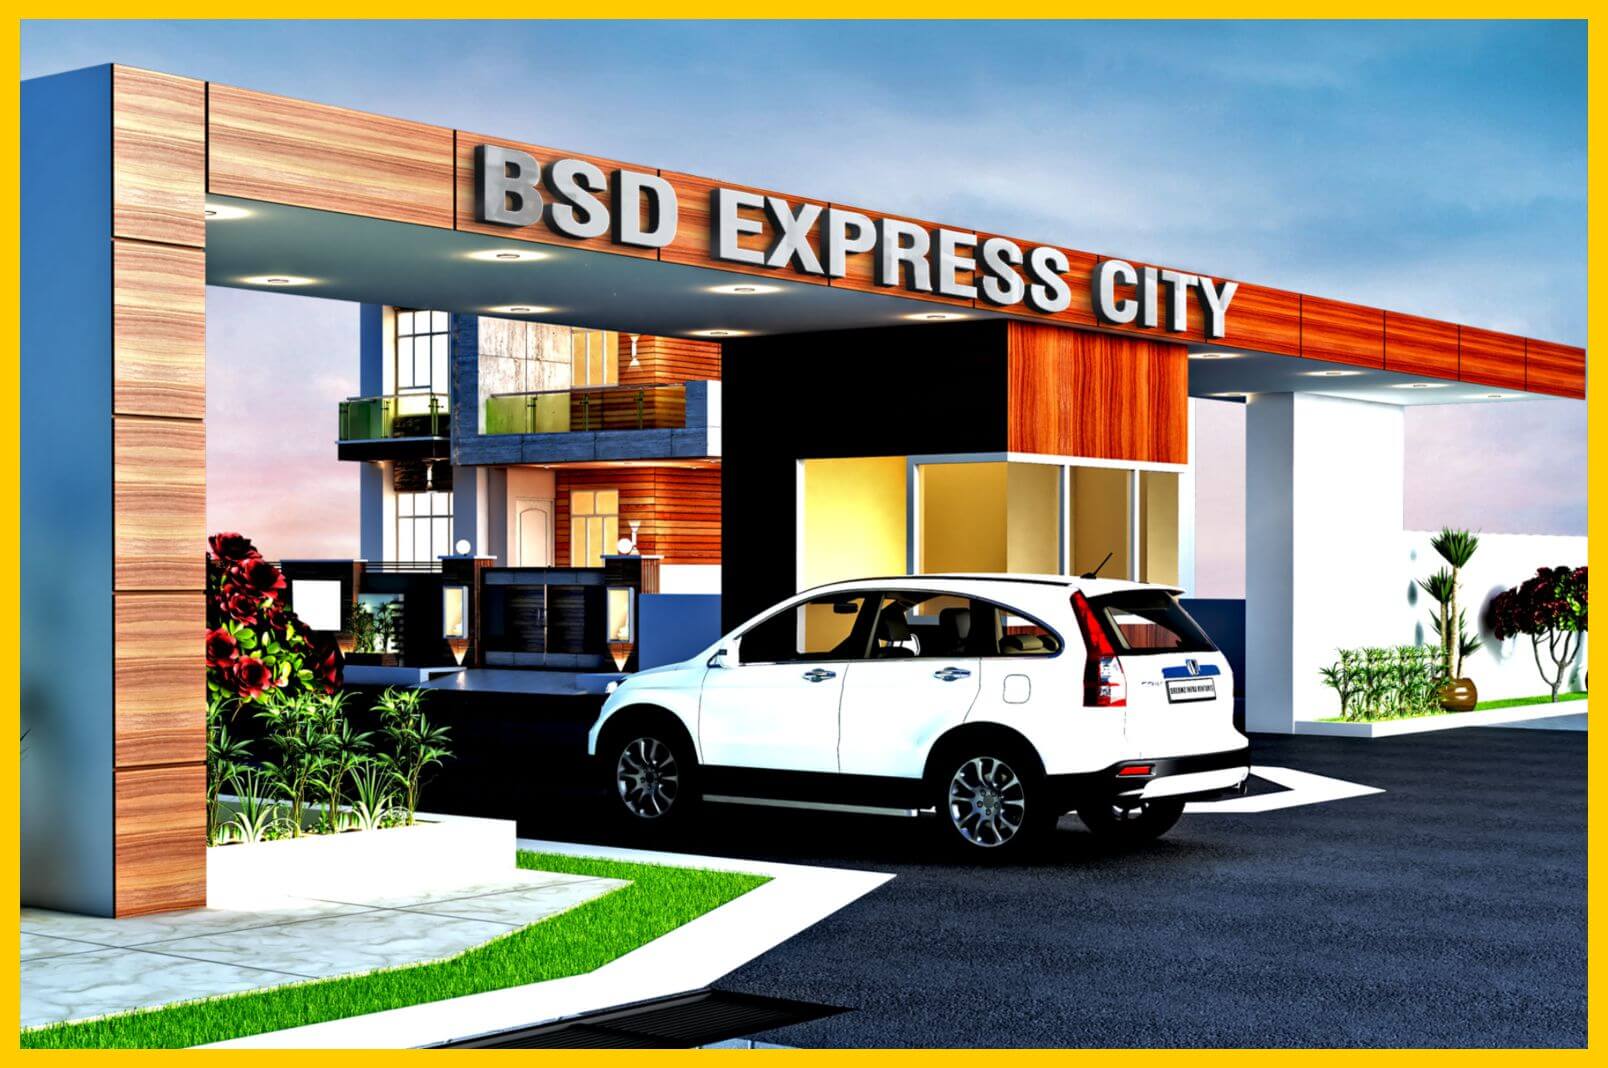 About BSD Express City